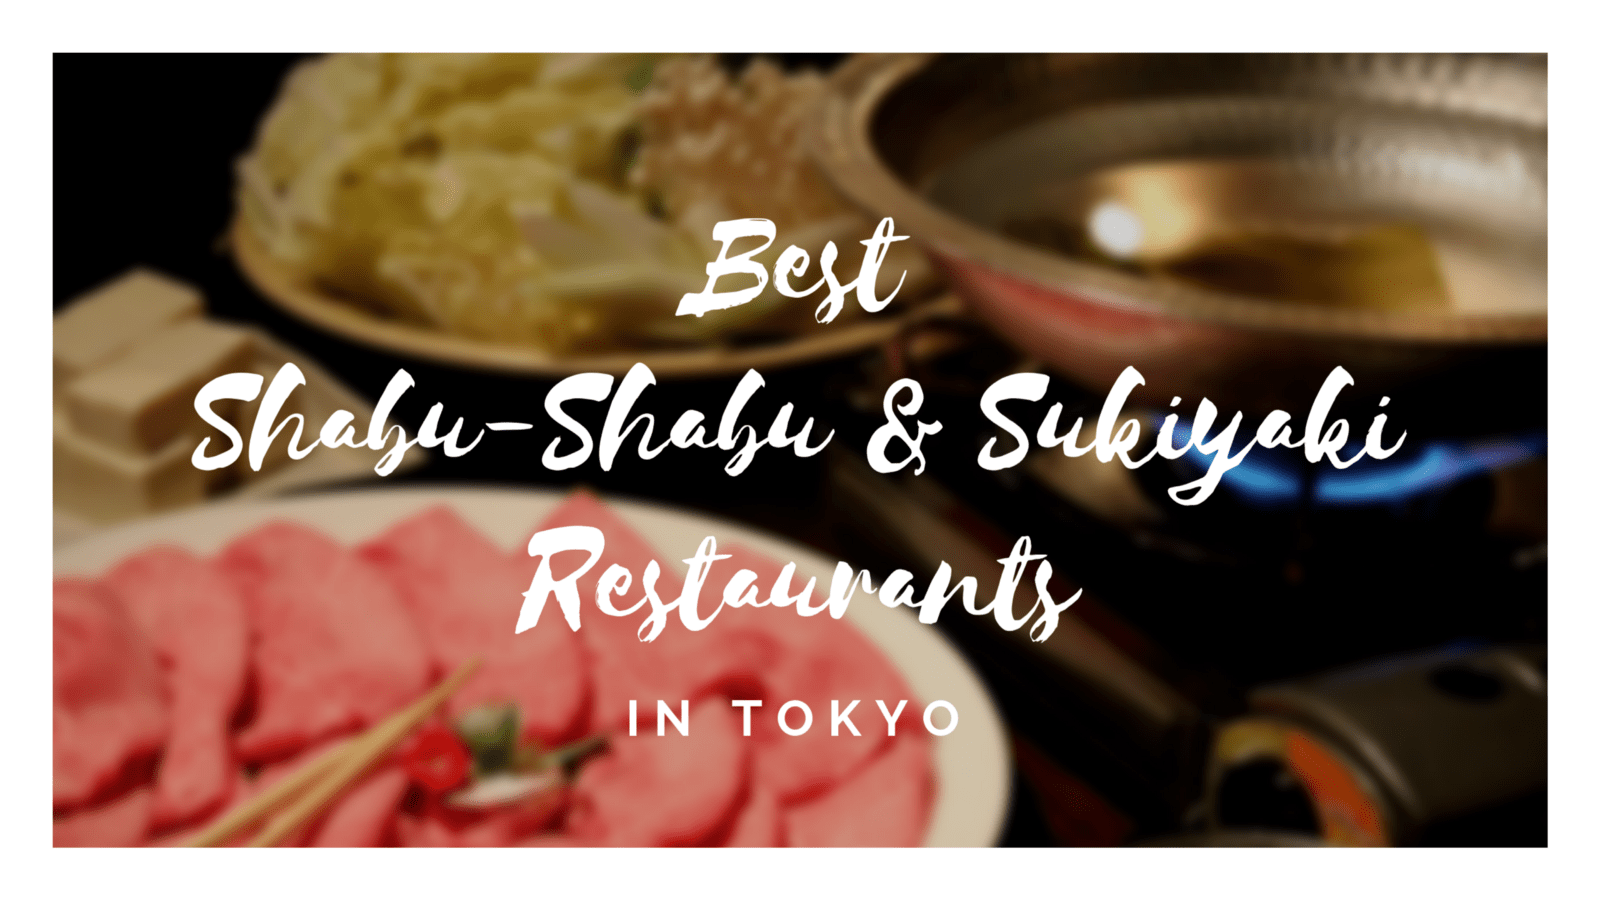 8 Best Shabu Shabu/Sukiyaki Restaurants in Tokyo